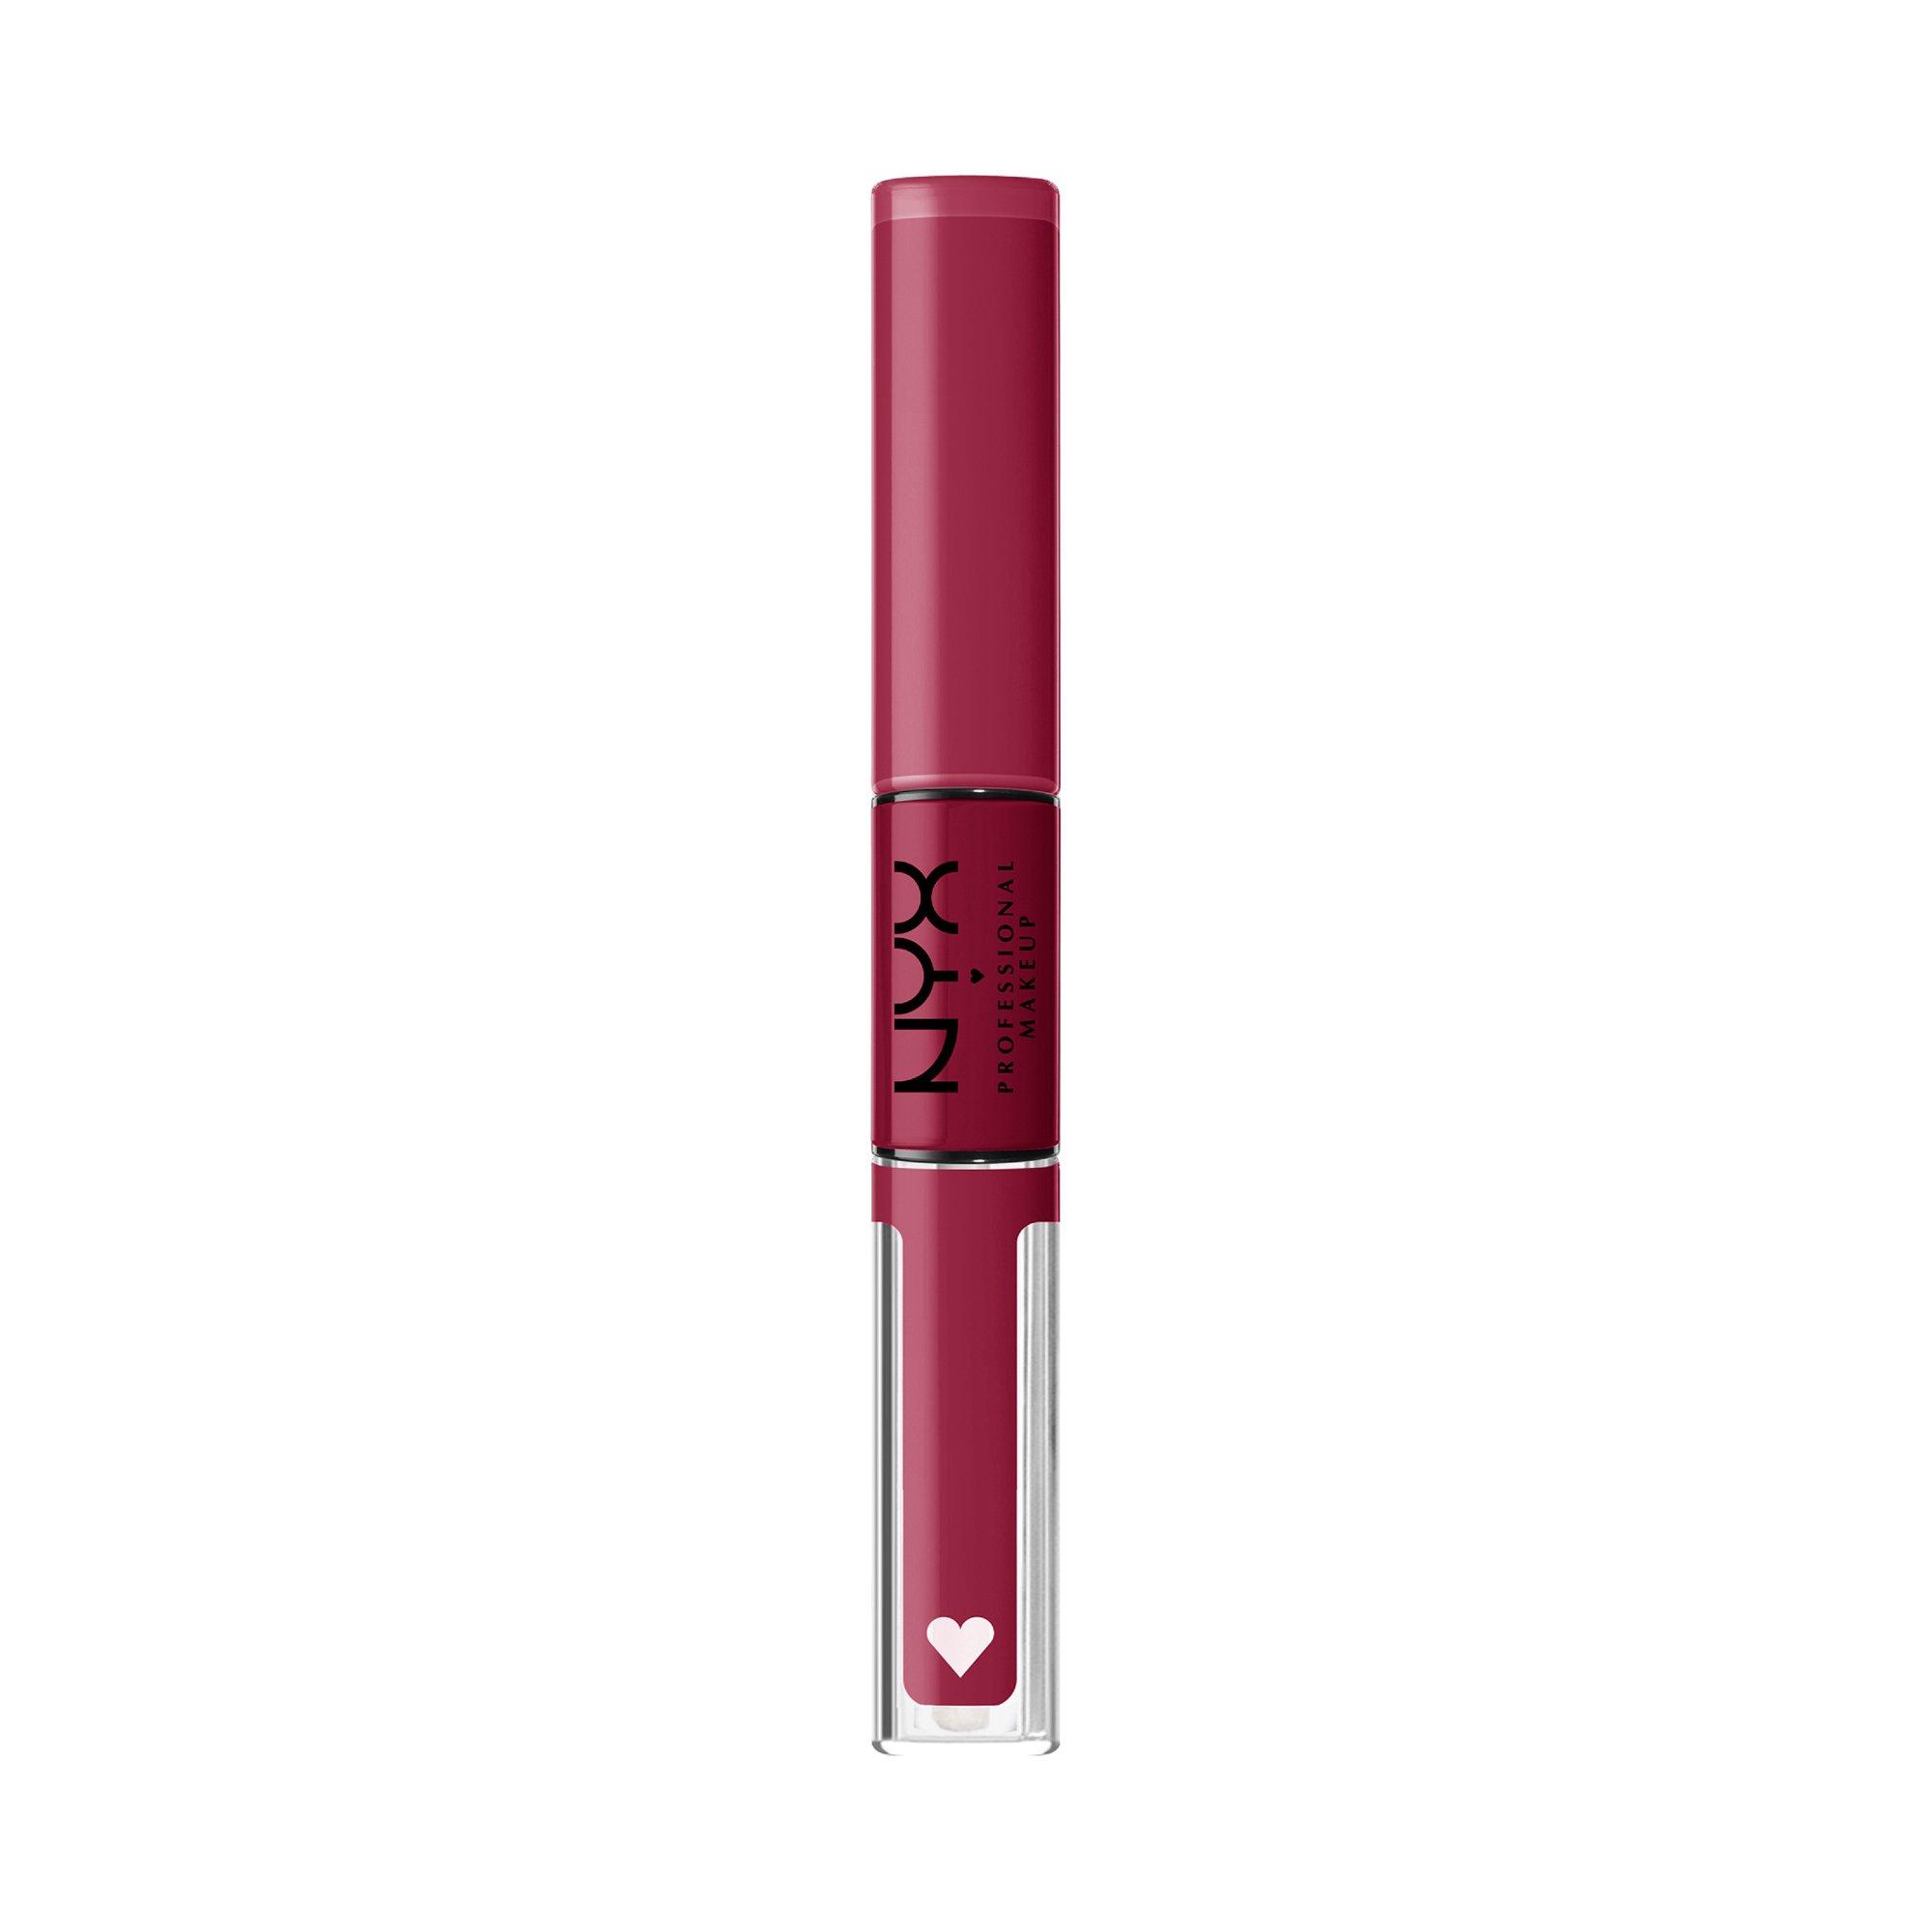 NYX-PROFESSIONAL-MAKEUP Shine Loud Pro Pigment Lip Shine Shine Loud Pro Lips 